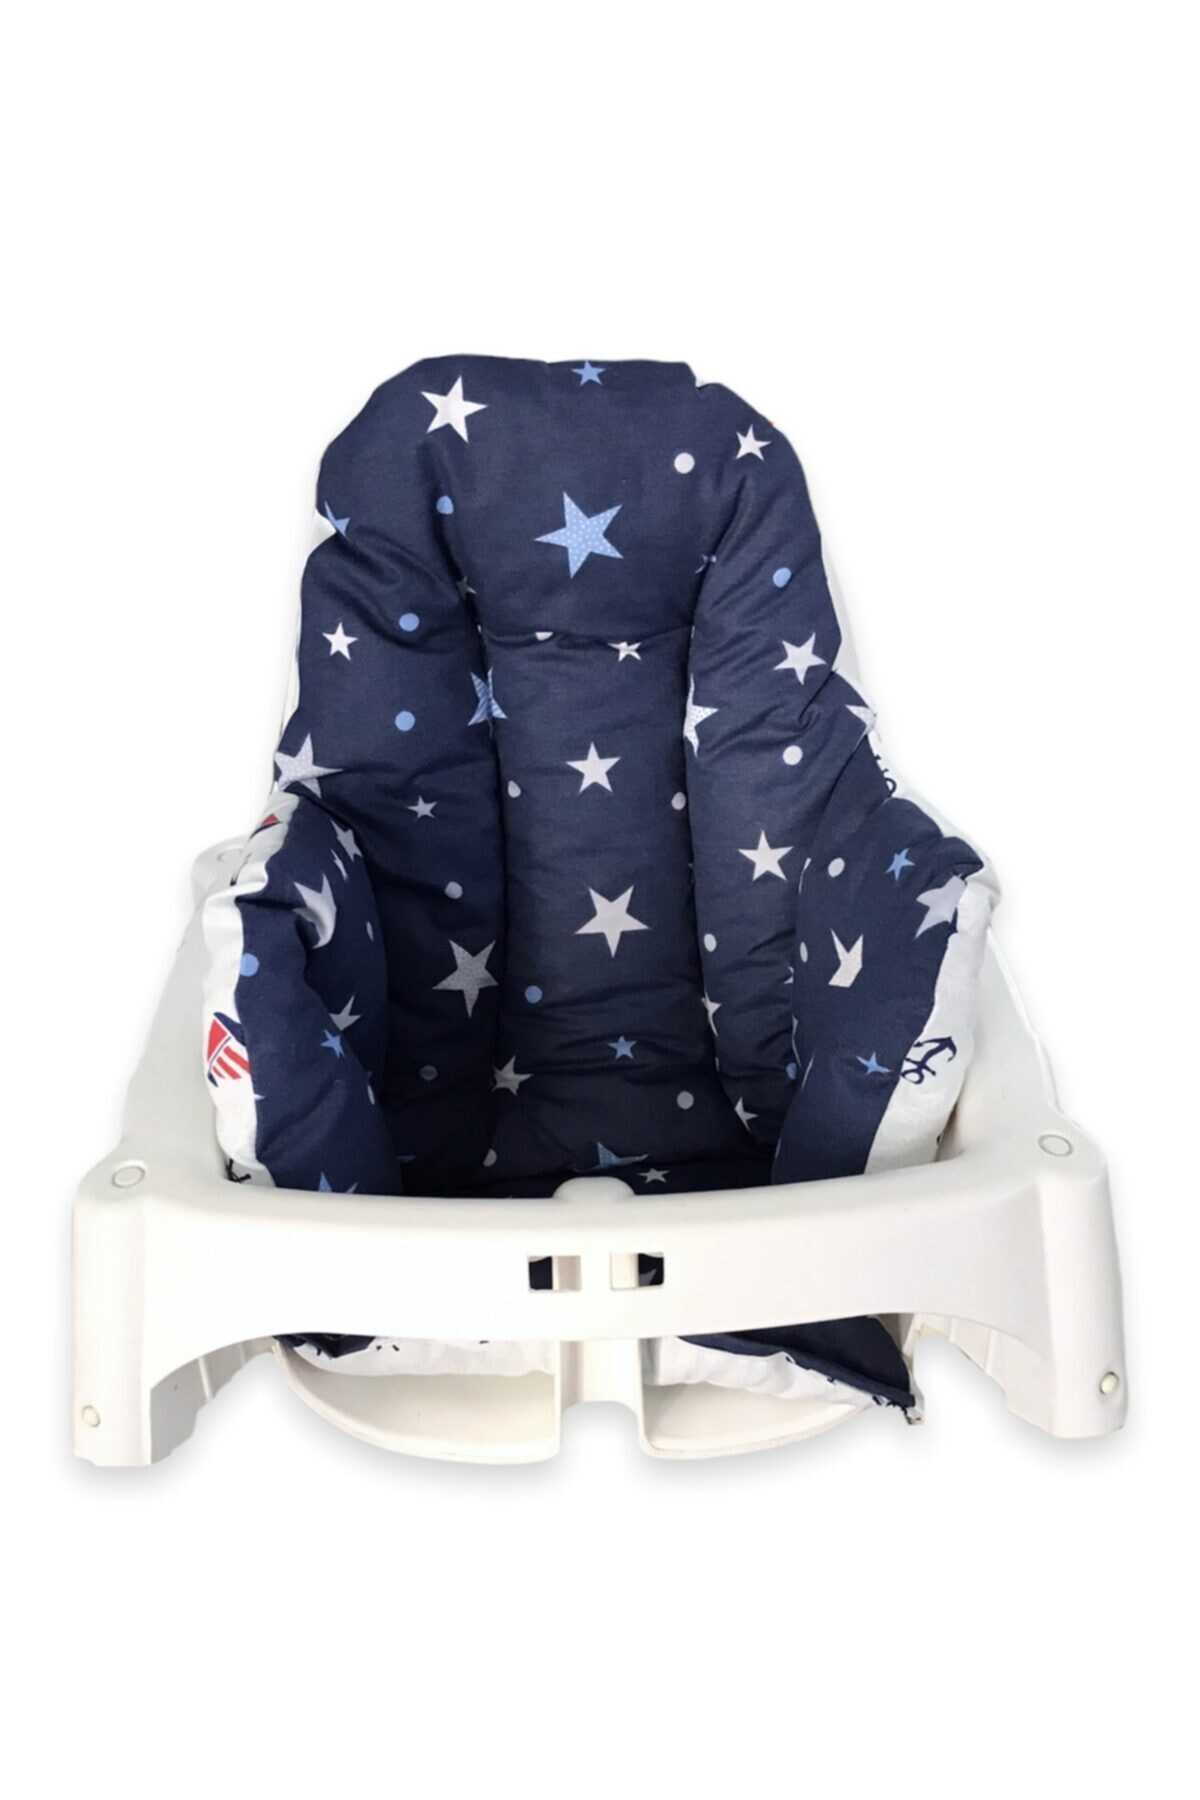 کوسن صندلی کودک دو رو طرح دار آبی تیره سفید برند Bebek Özel 